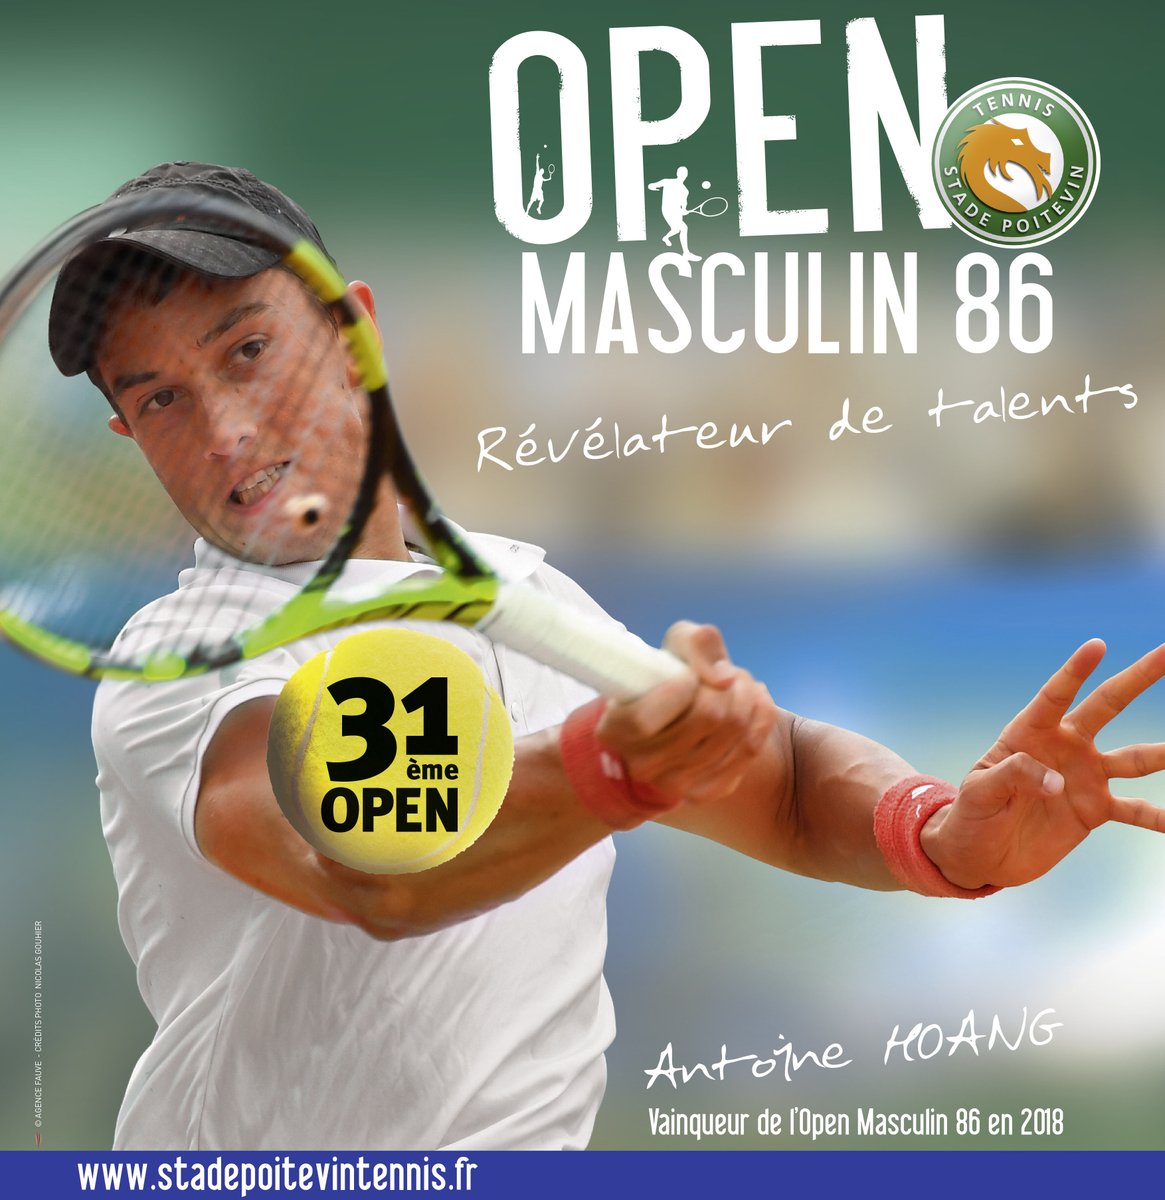 Open_tennis_2019.jpg